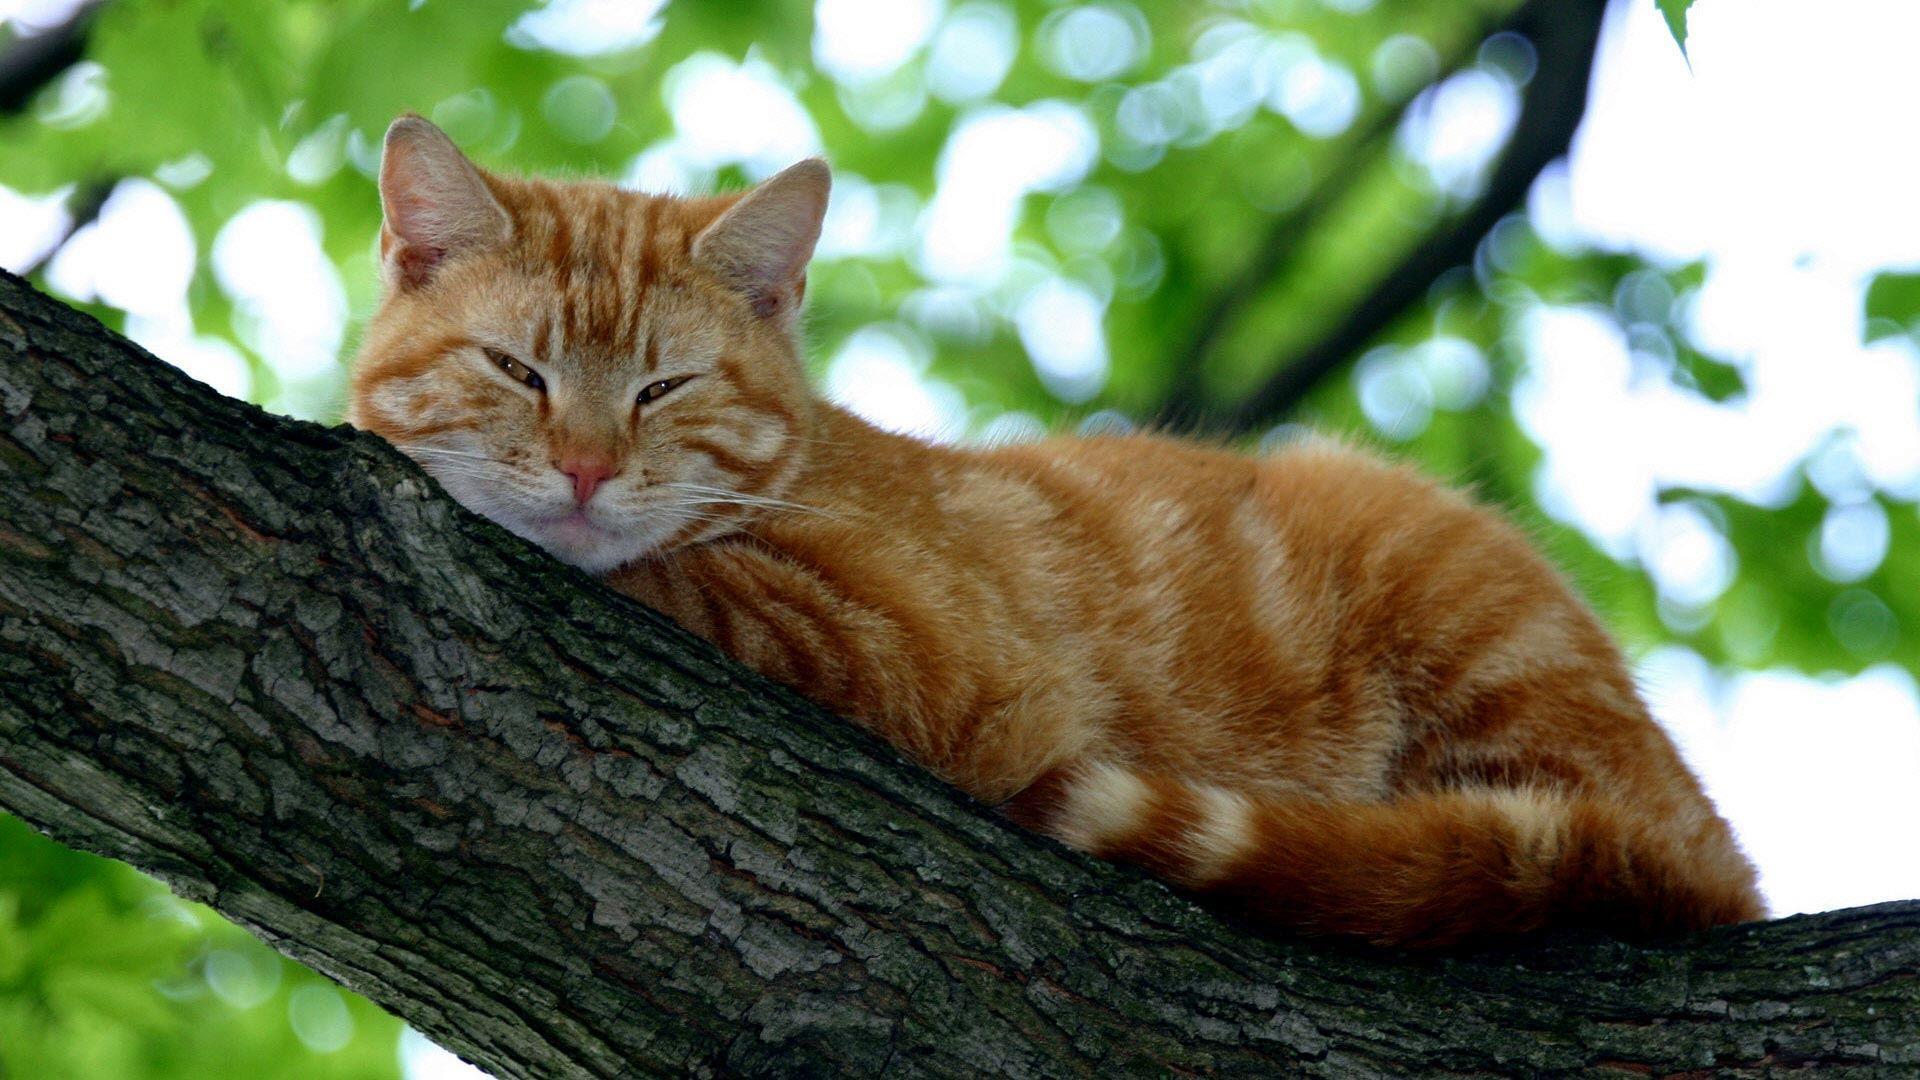 Full HD Cat Wallpaper ♥: Orange Cat in a Tree. cats in trees